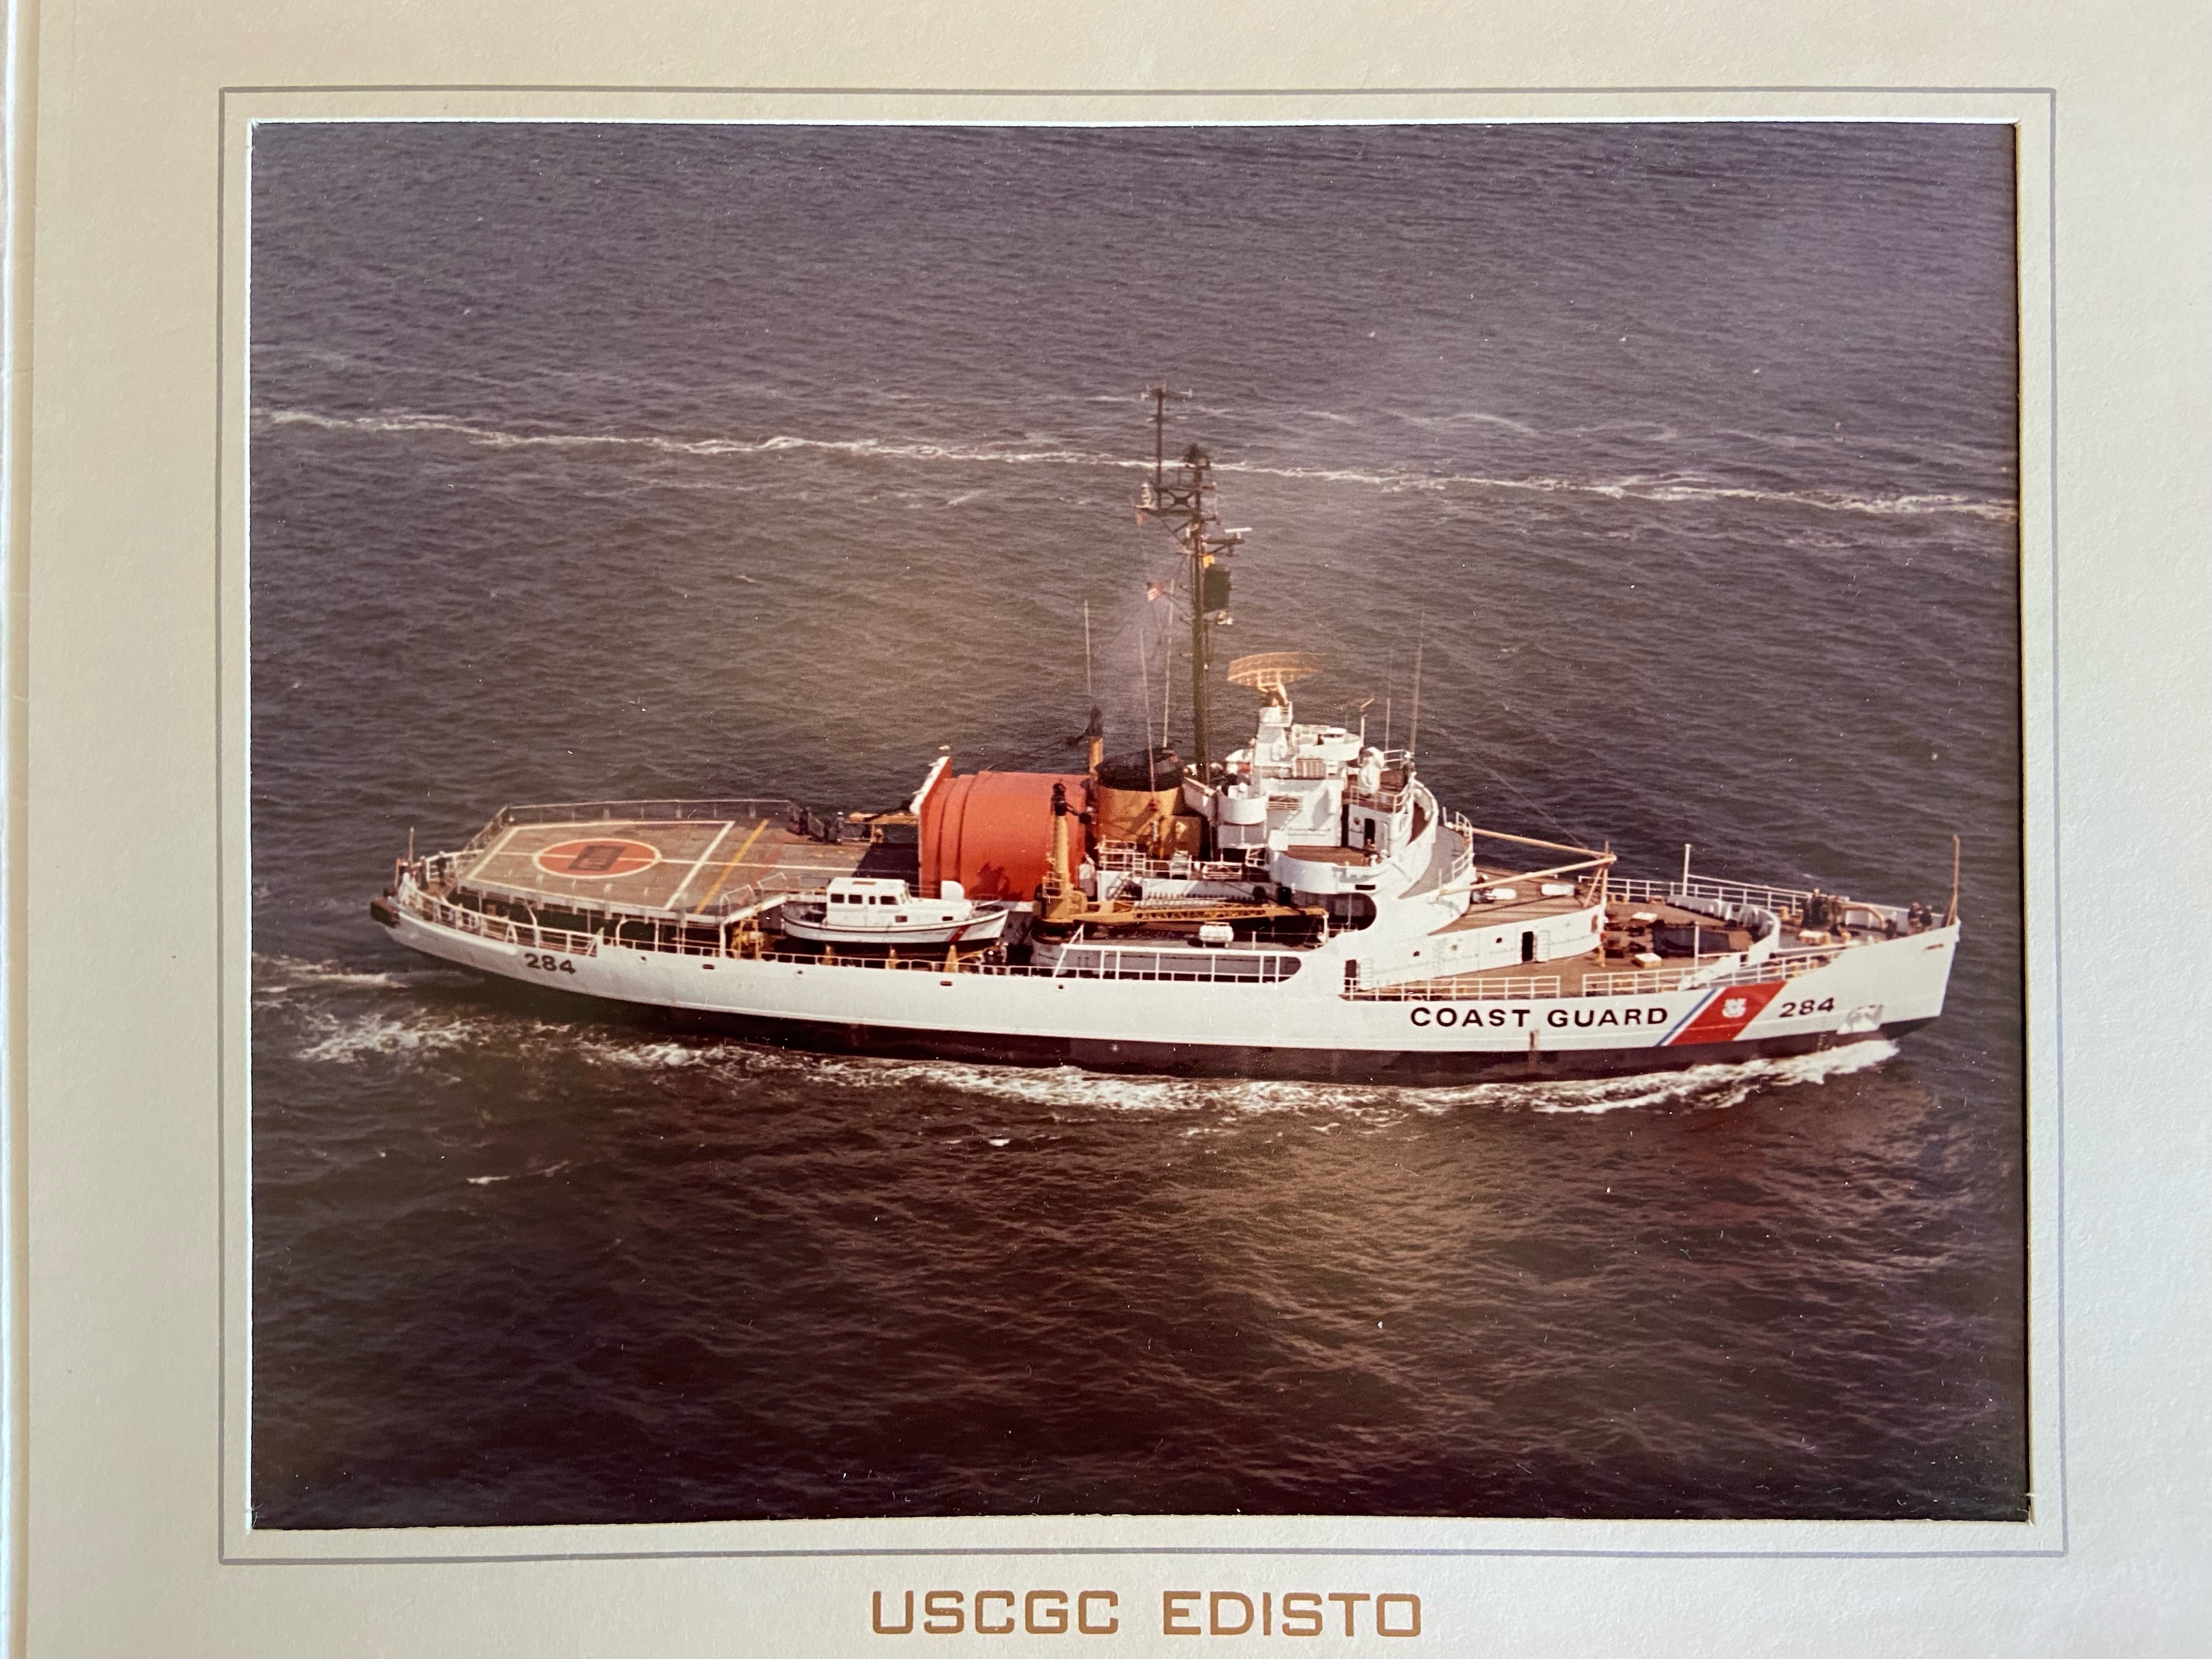 Edisto, 1965 (WAGB-284) > United States Coast Guard > All